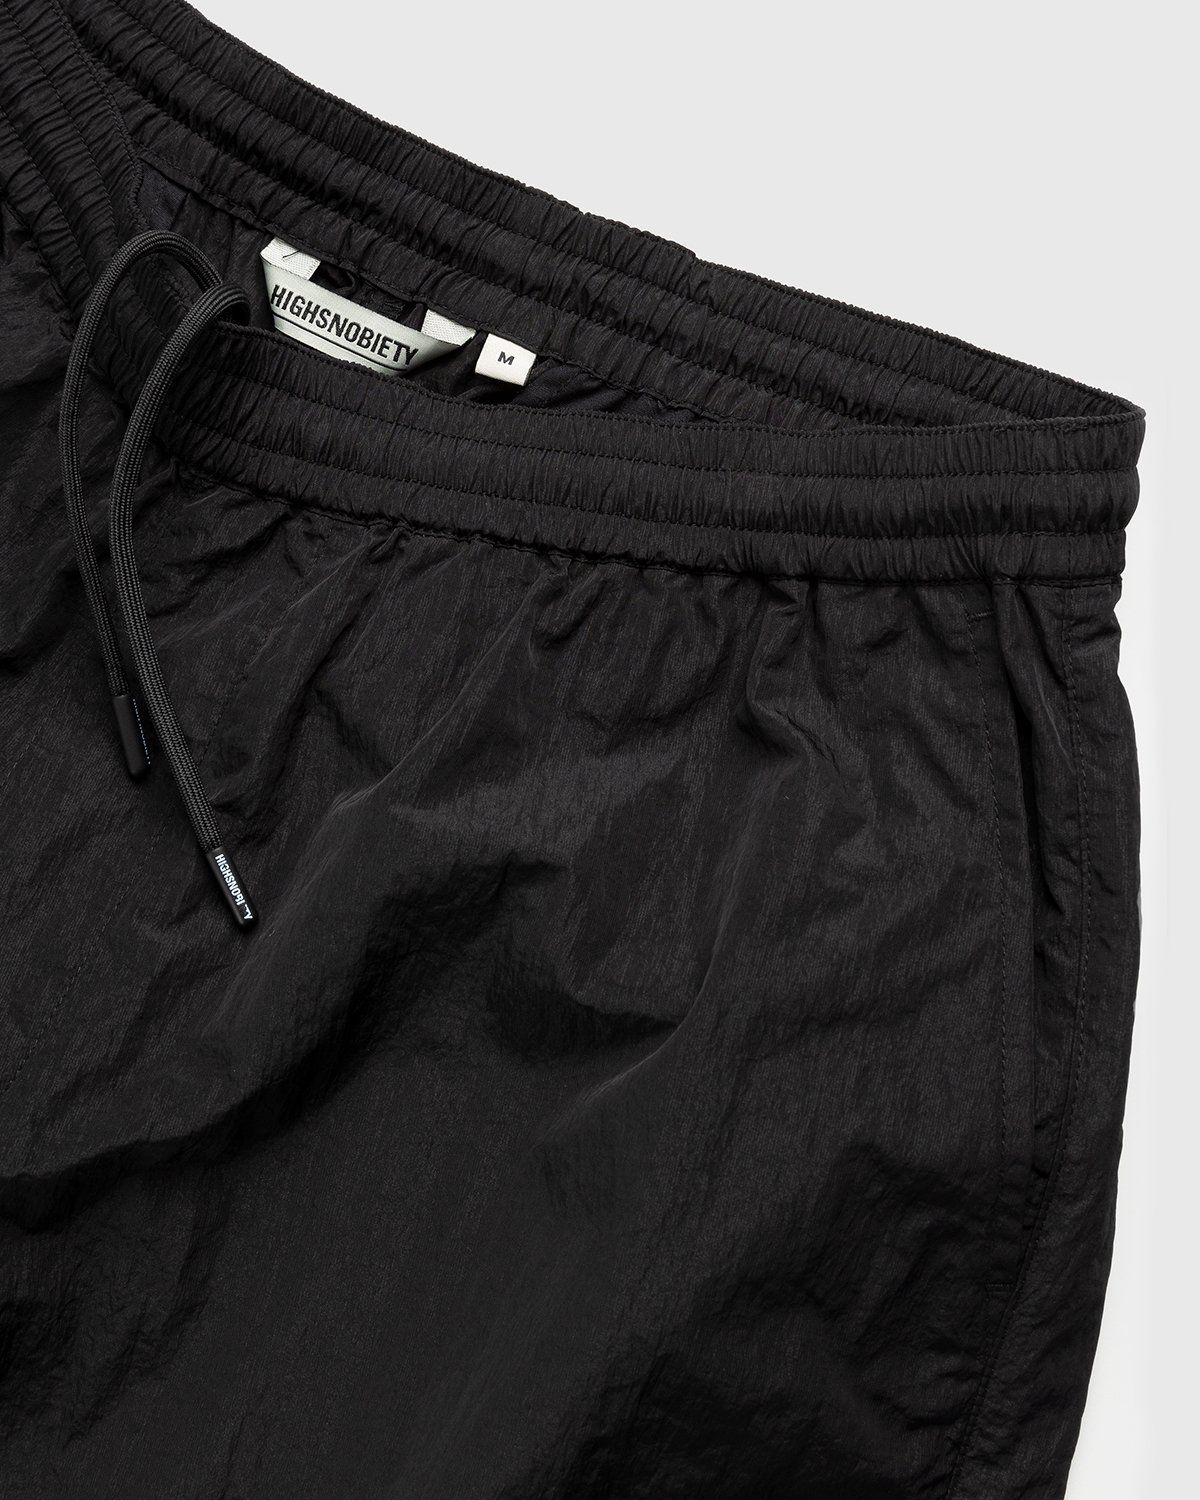 Highsnobiety – Crepe Nylon Shorts Black - Shorts - Black - Image 4